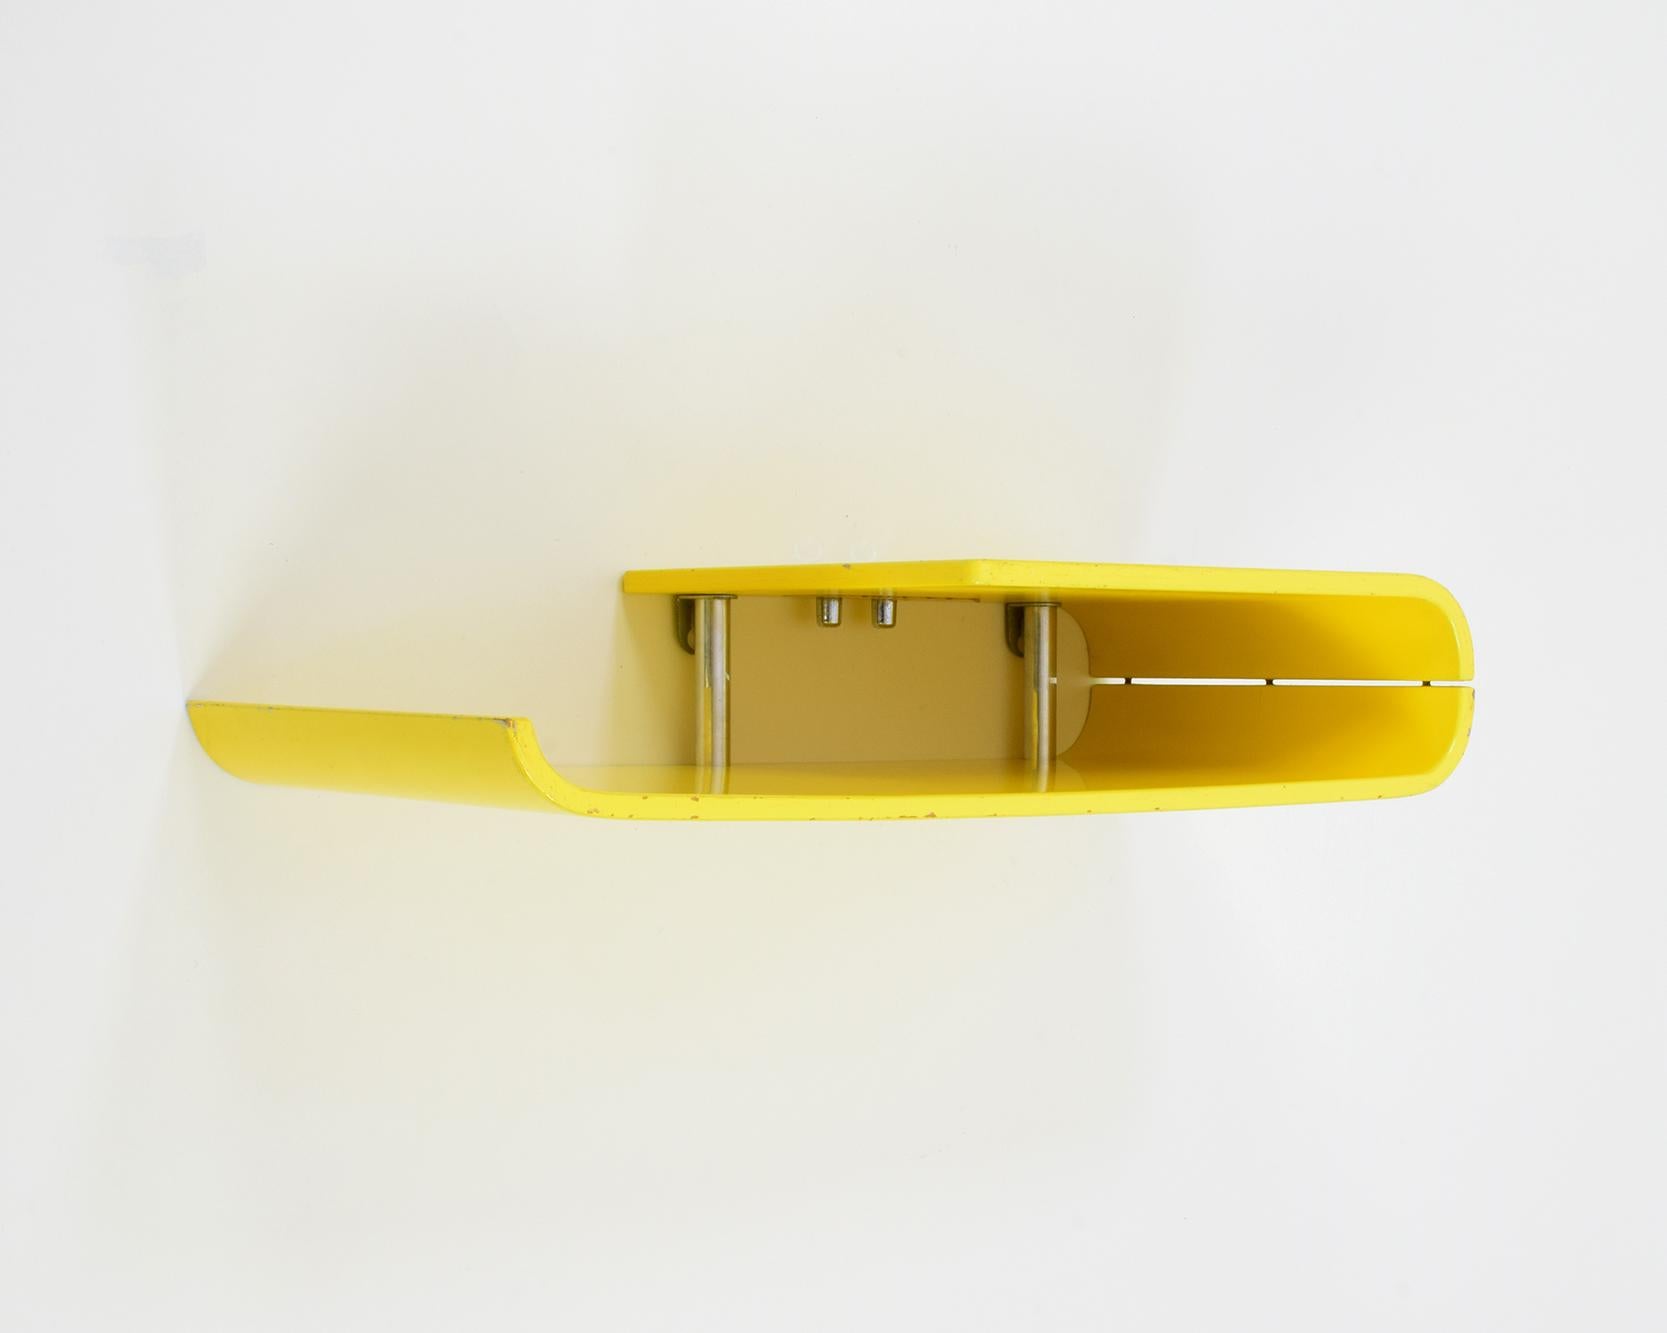 Schönbuch 'Telefonkonsole' Wall-Mounted Shelf Unit Console with Pen Holders For Sale 1